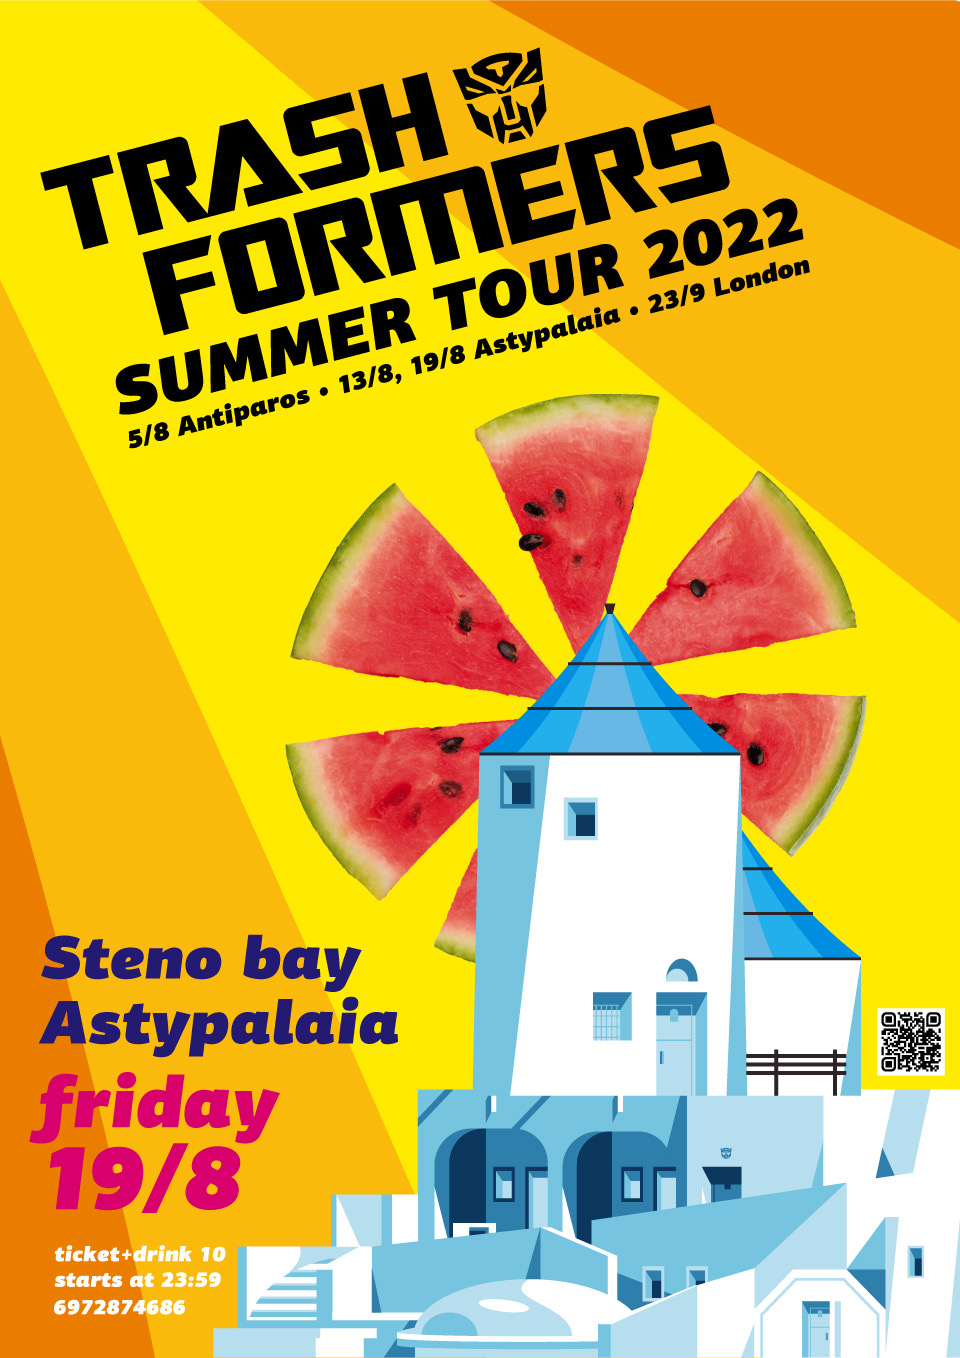 Trashformers Summer 2022 - Astypalea poster